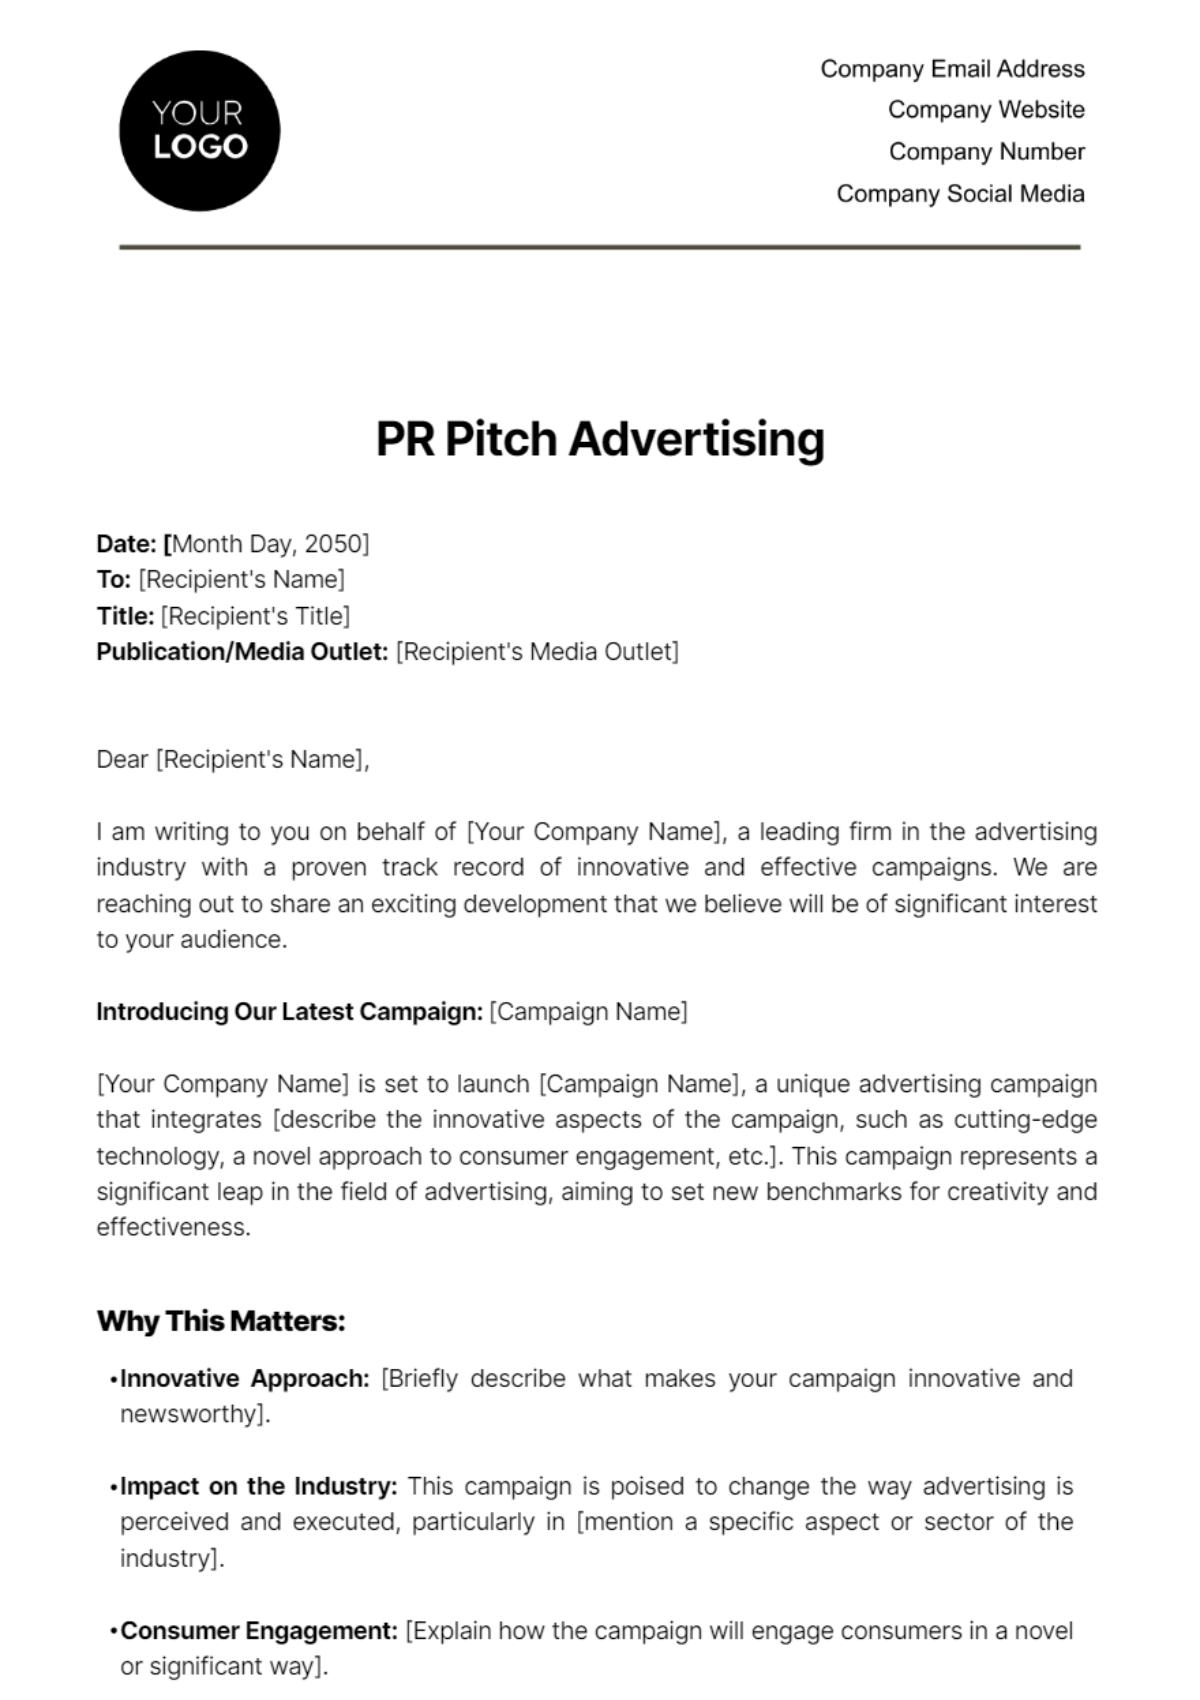 PR Pitch Advertising Template